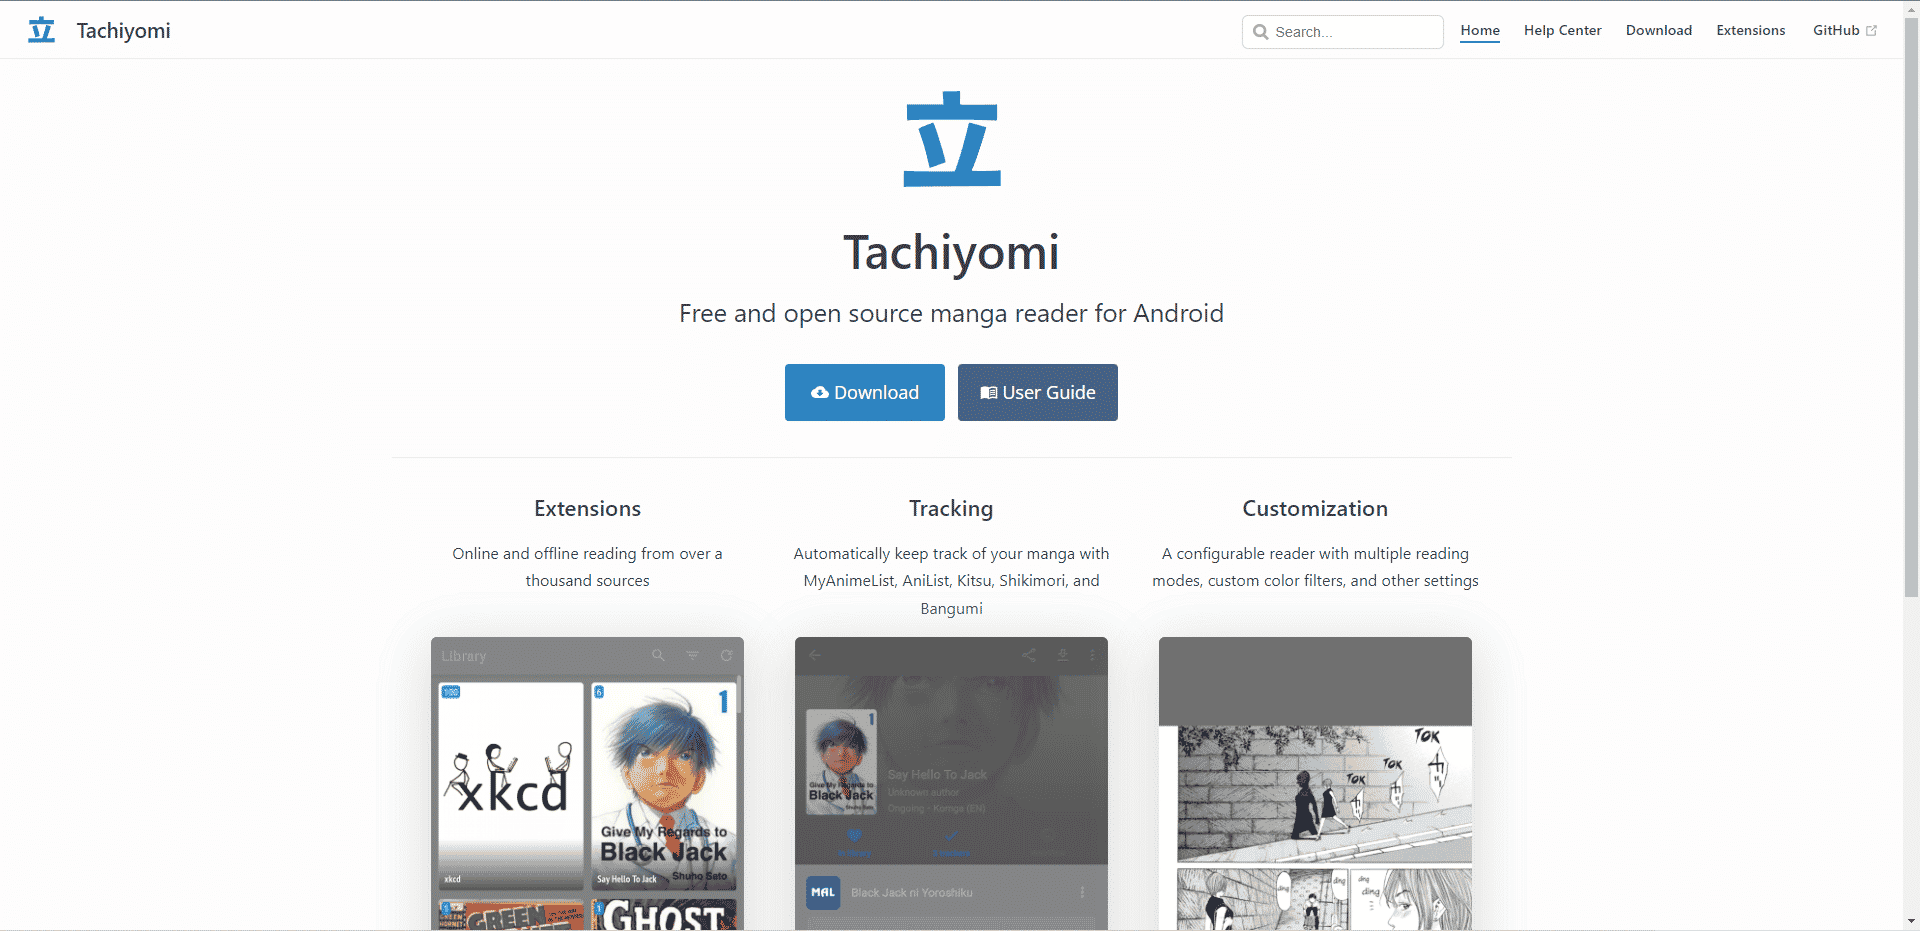 Tachiyomi official website